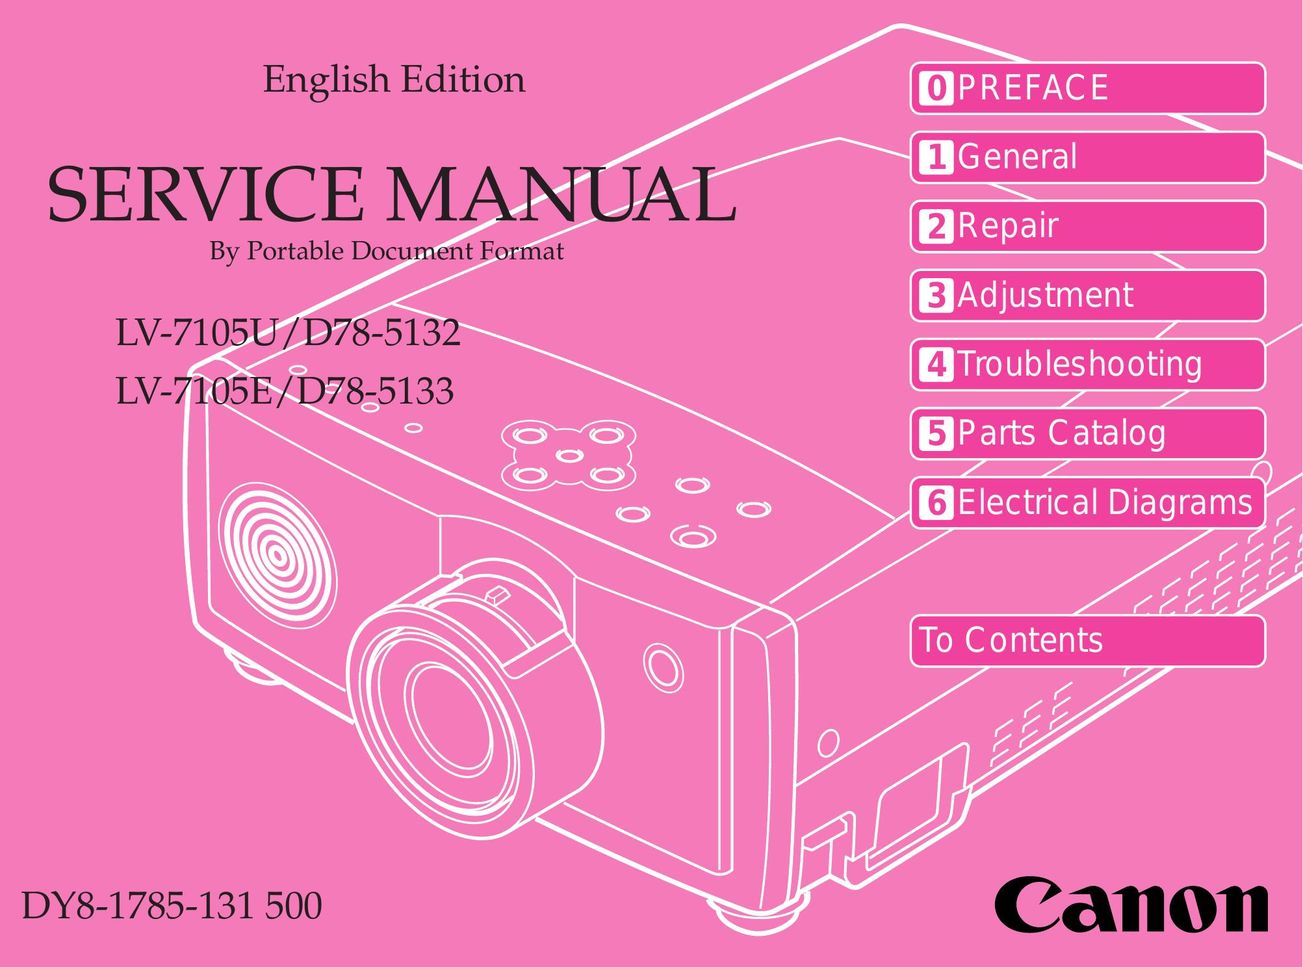 Canon LV-7105E/D78-5133 Projector User Manual